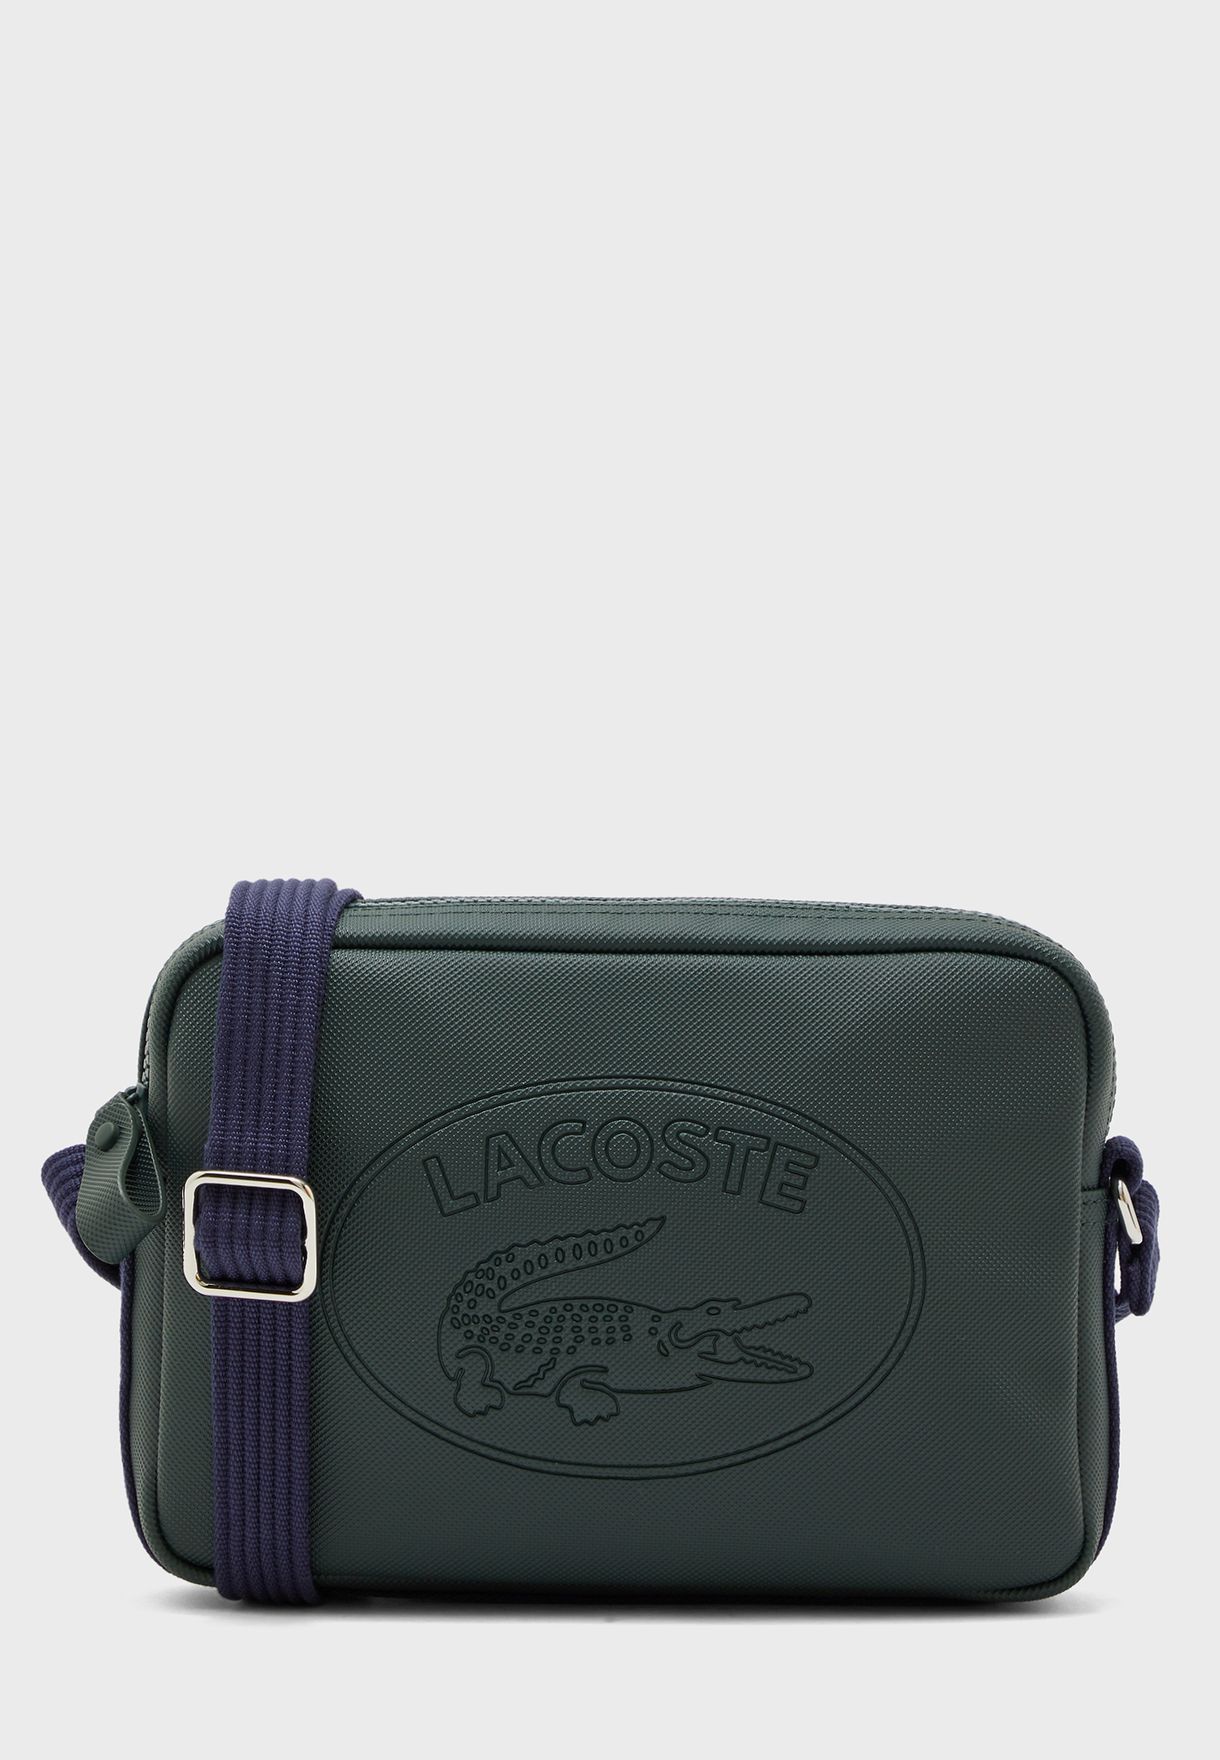 lacoste bag for women